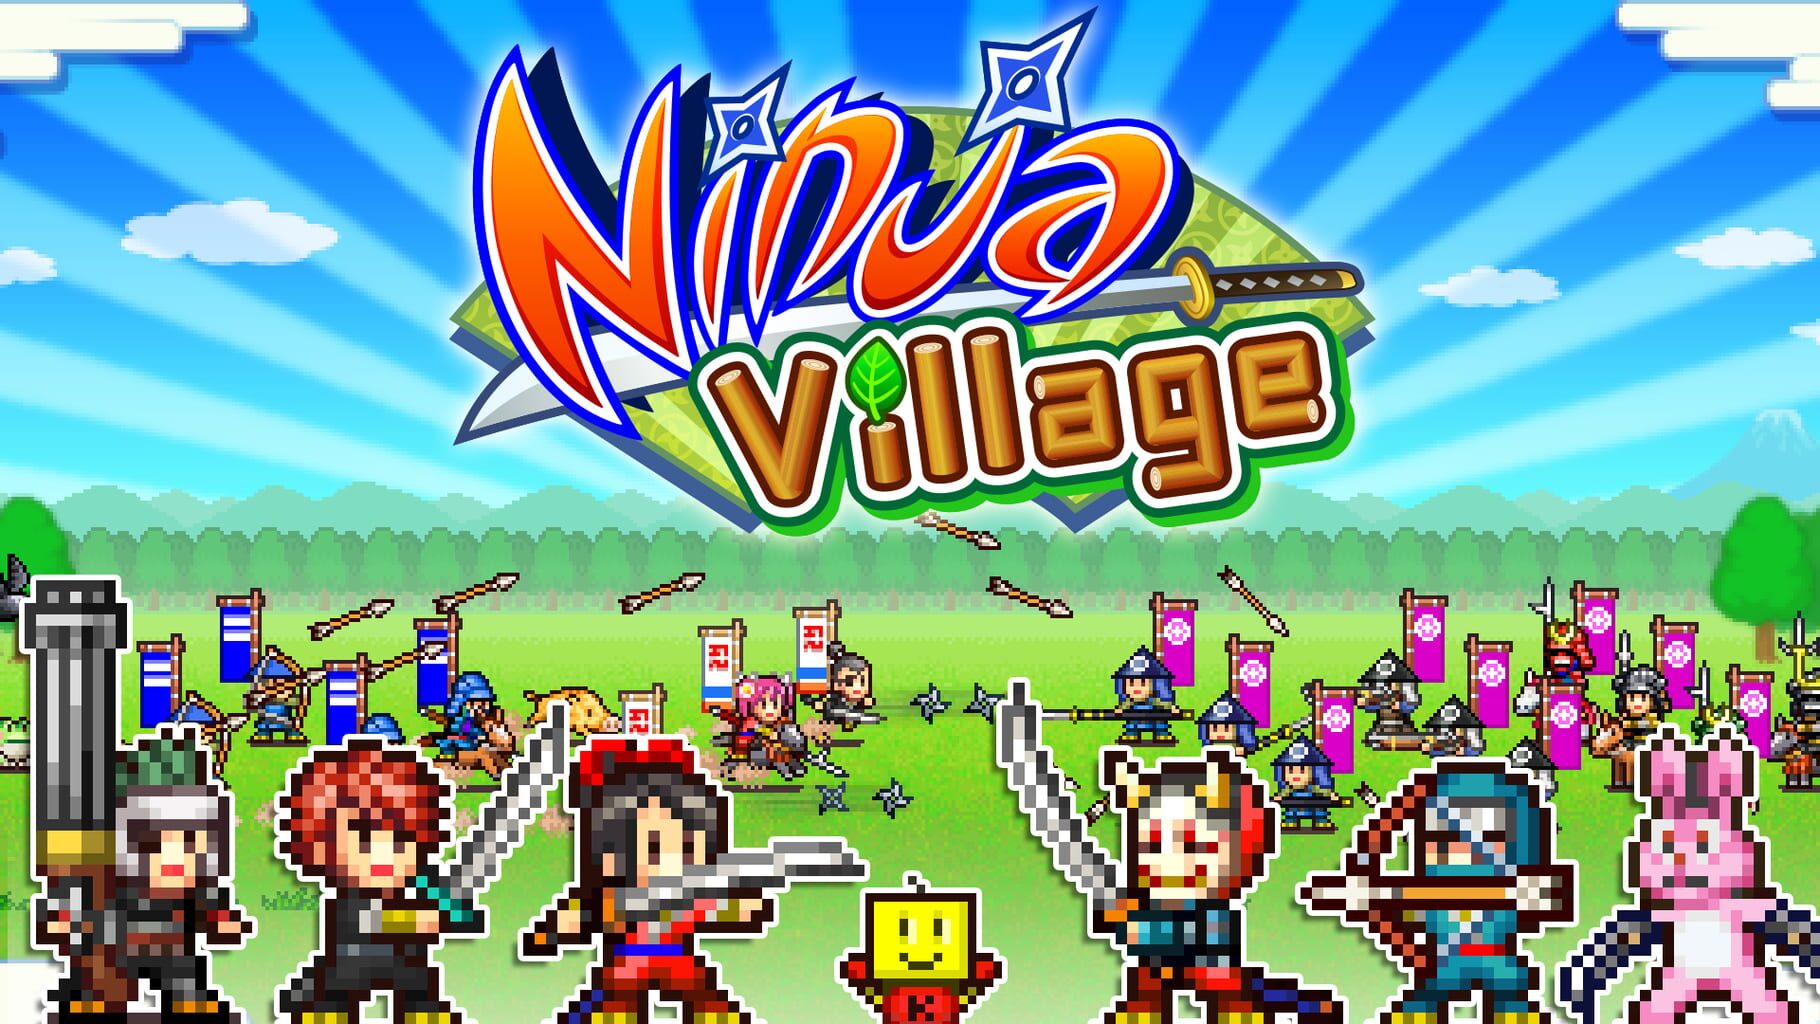 Ninja Village artwork